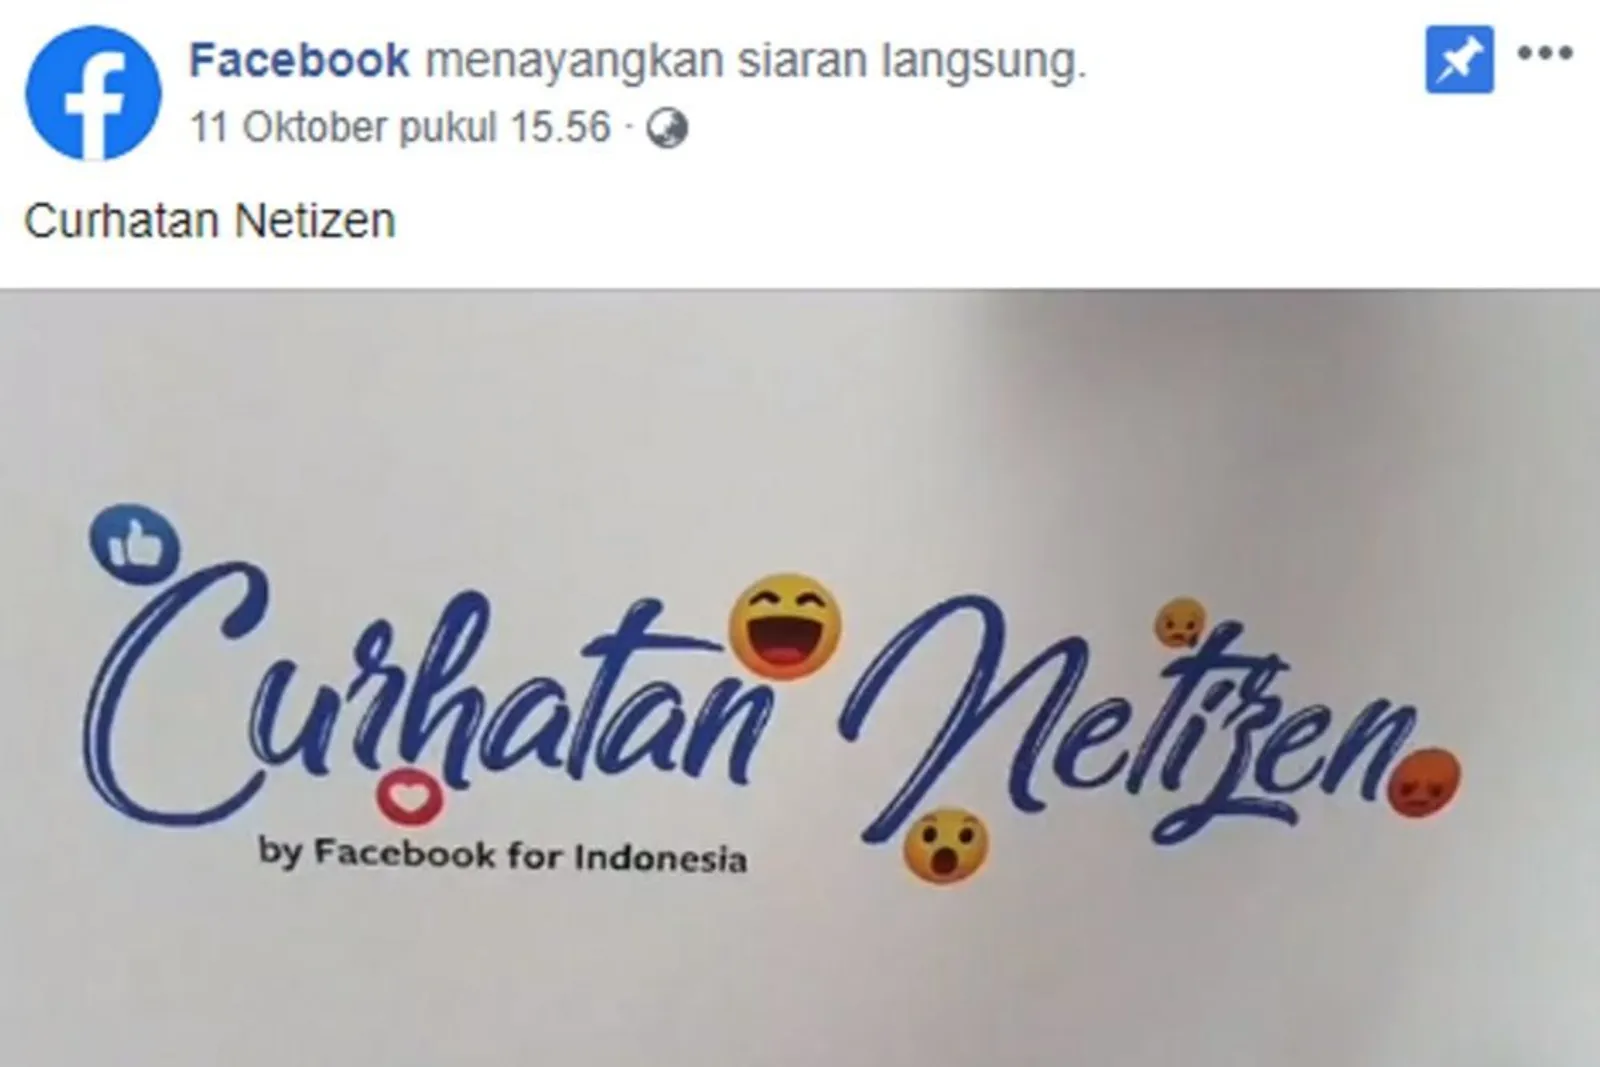 Sharing Pengalaman, Facebook Luncurkan Program "Curhatan Netizen"